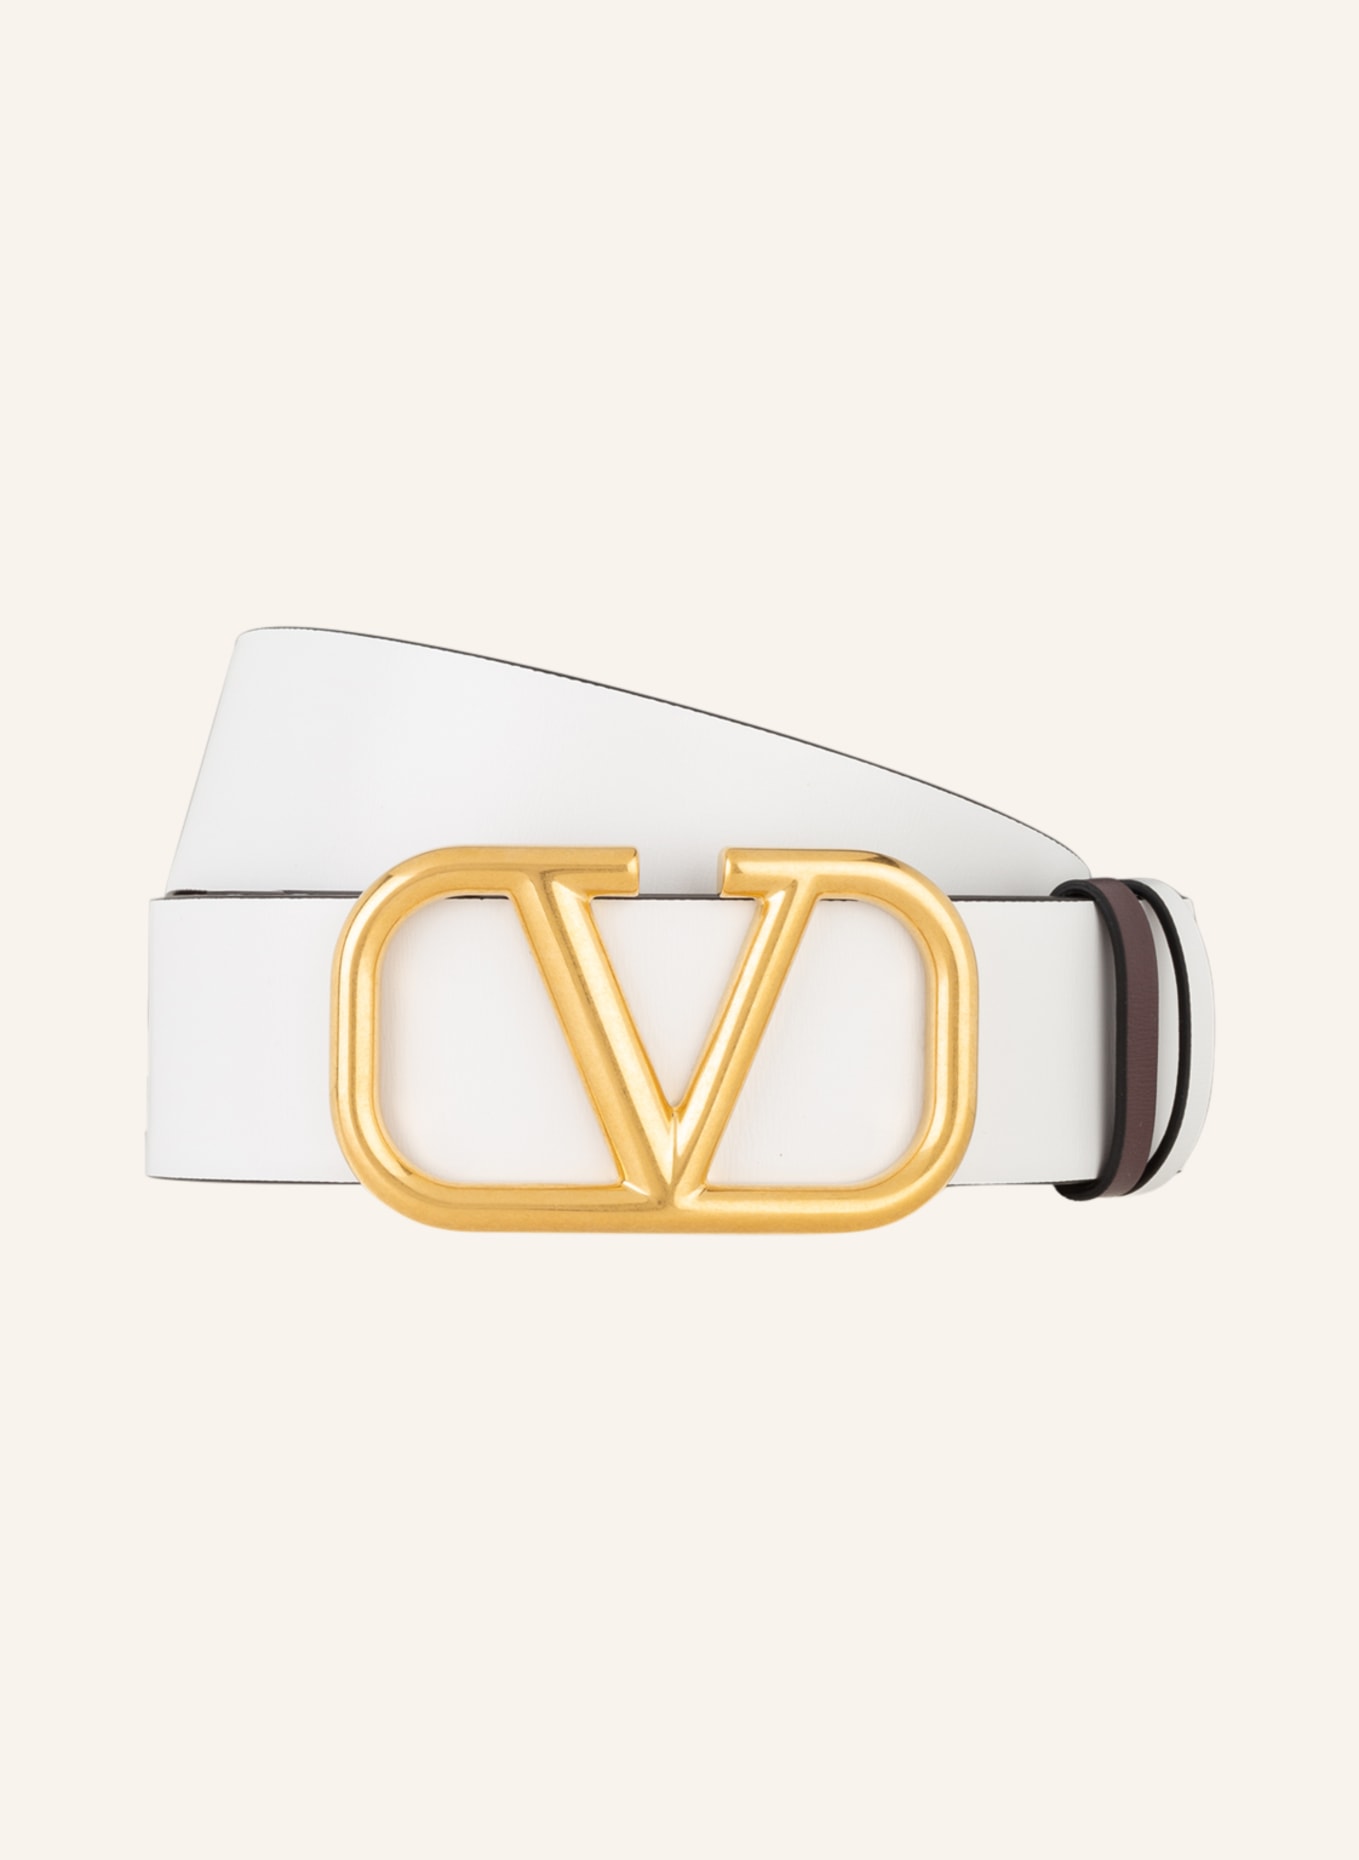 Valentino - Garavani VLOGO Reversible Oversized Belt - Black or Red